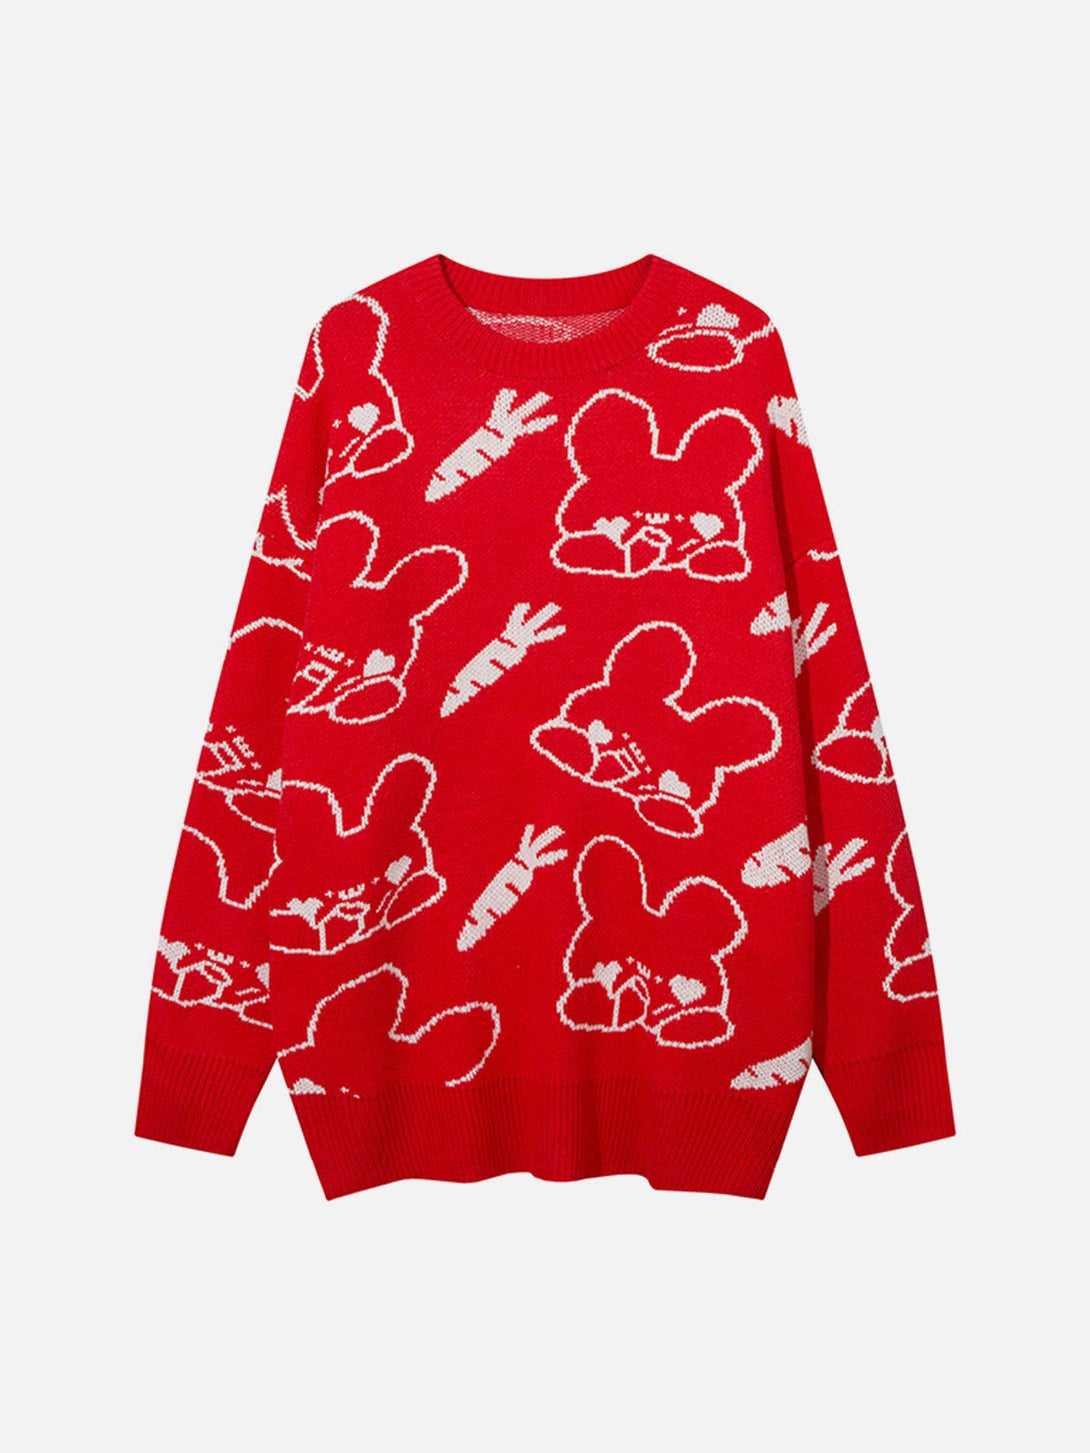 Majesda® - Rabbit Carrot Knit Sweater outfit ideas streetwear fashion